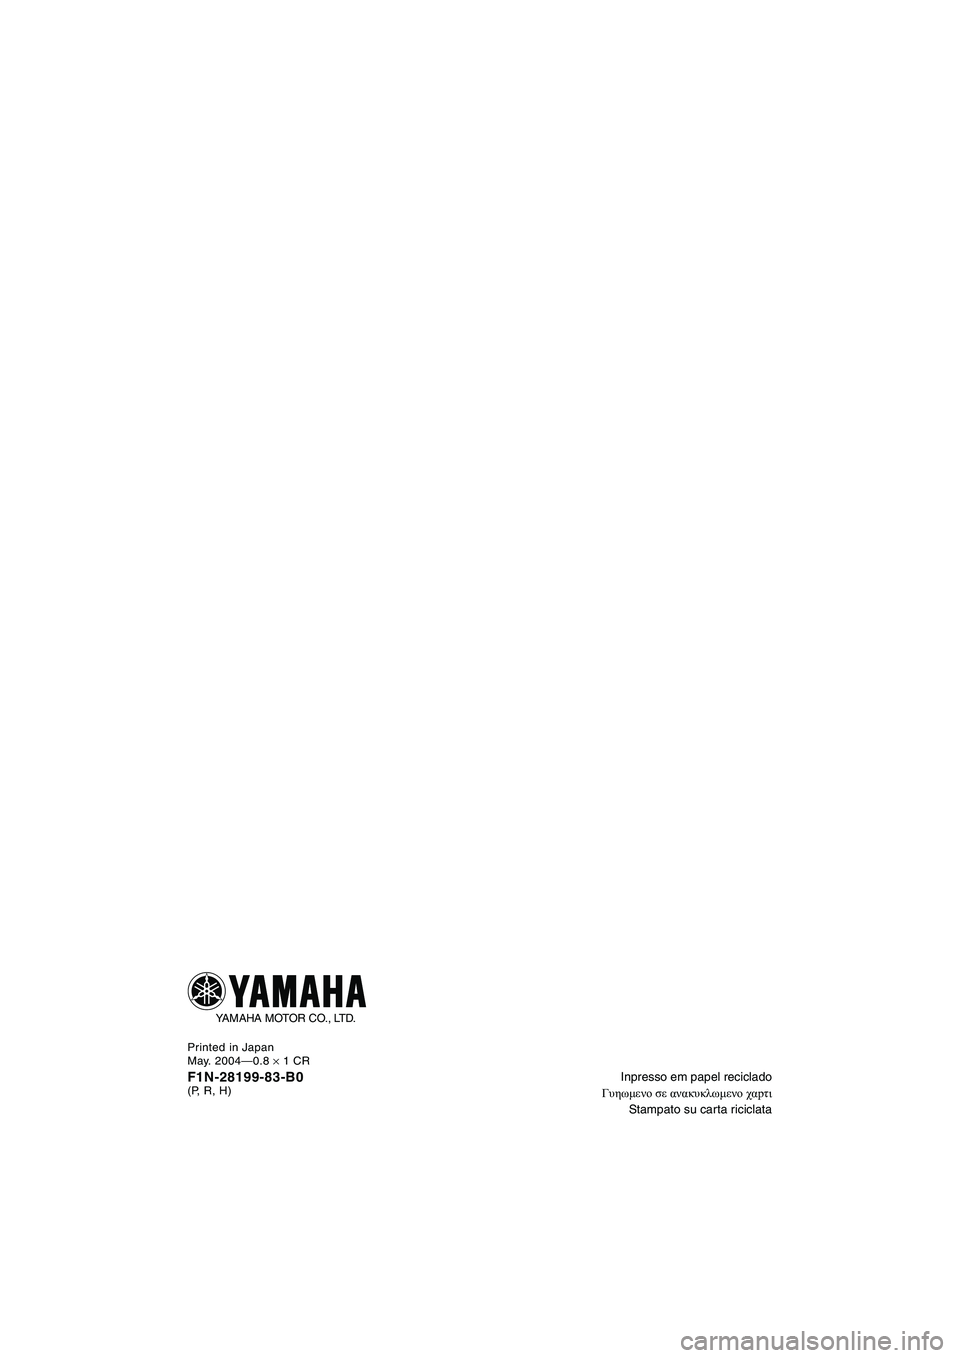 YAMAHA SUPERJET 2005  Manual de utilização (in Portuguese) Inpresso em papel reciclado
Γυηωμενο σε ανακυκλωμενο χαpτι
Stampato su carta riciclata
Printed in Japan
May. 2004—0.8 
× 1 CR
F1N-28199-83-B0(P, R, H)
YAMAHA MOTOR CO., LT